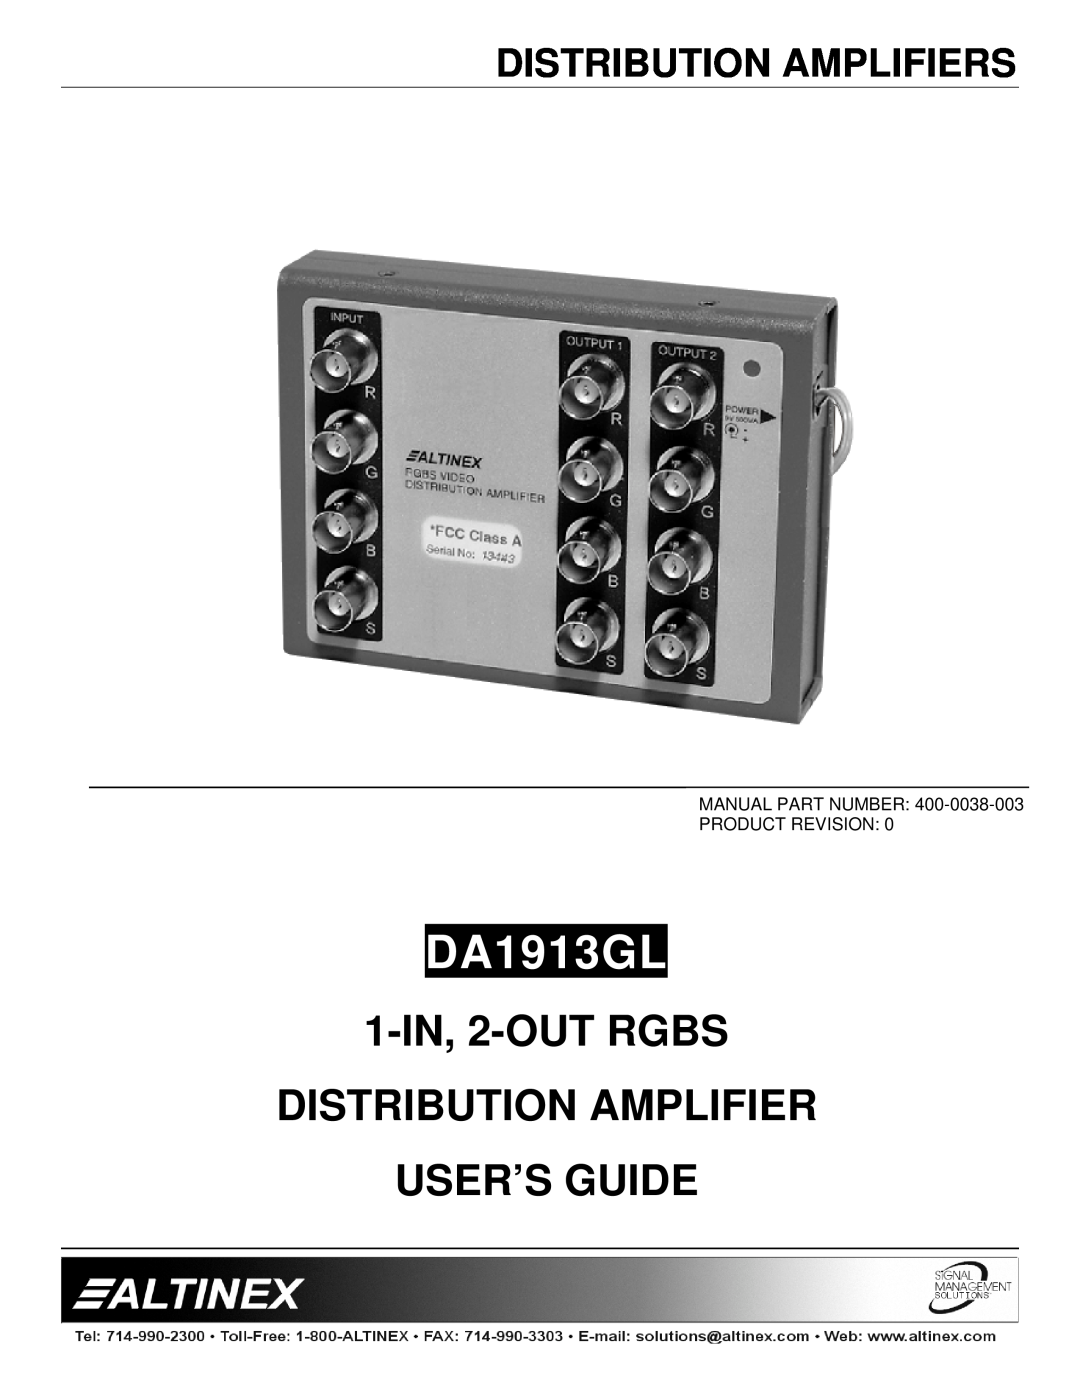 Altinex DA1913GL manual Distribution Amplifiers, 1-IN, 2-OUTRGBS DISTRIBUTION AMPLIFIER, User’S Guide 